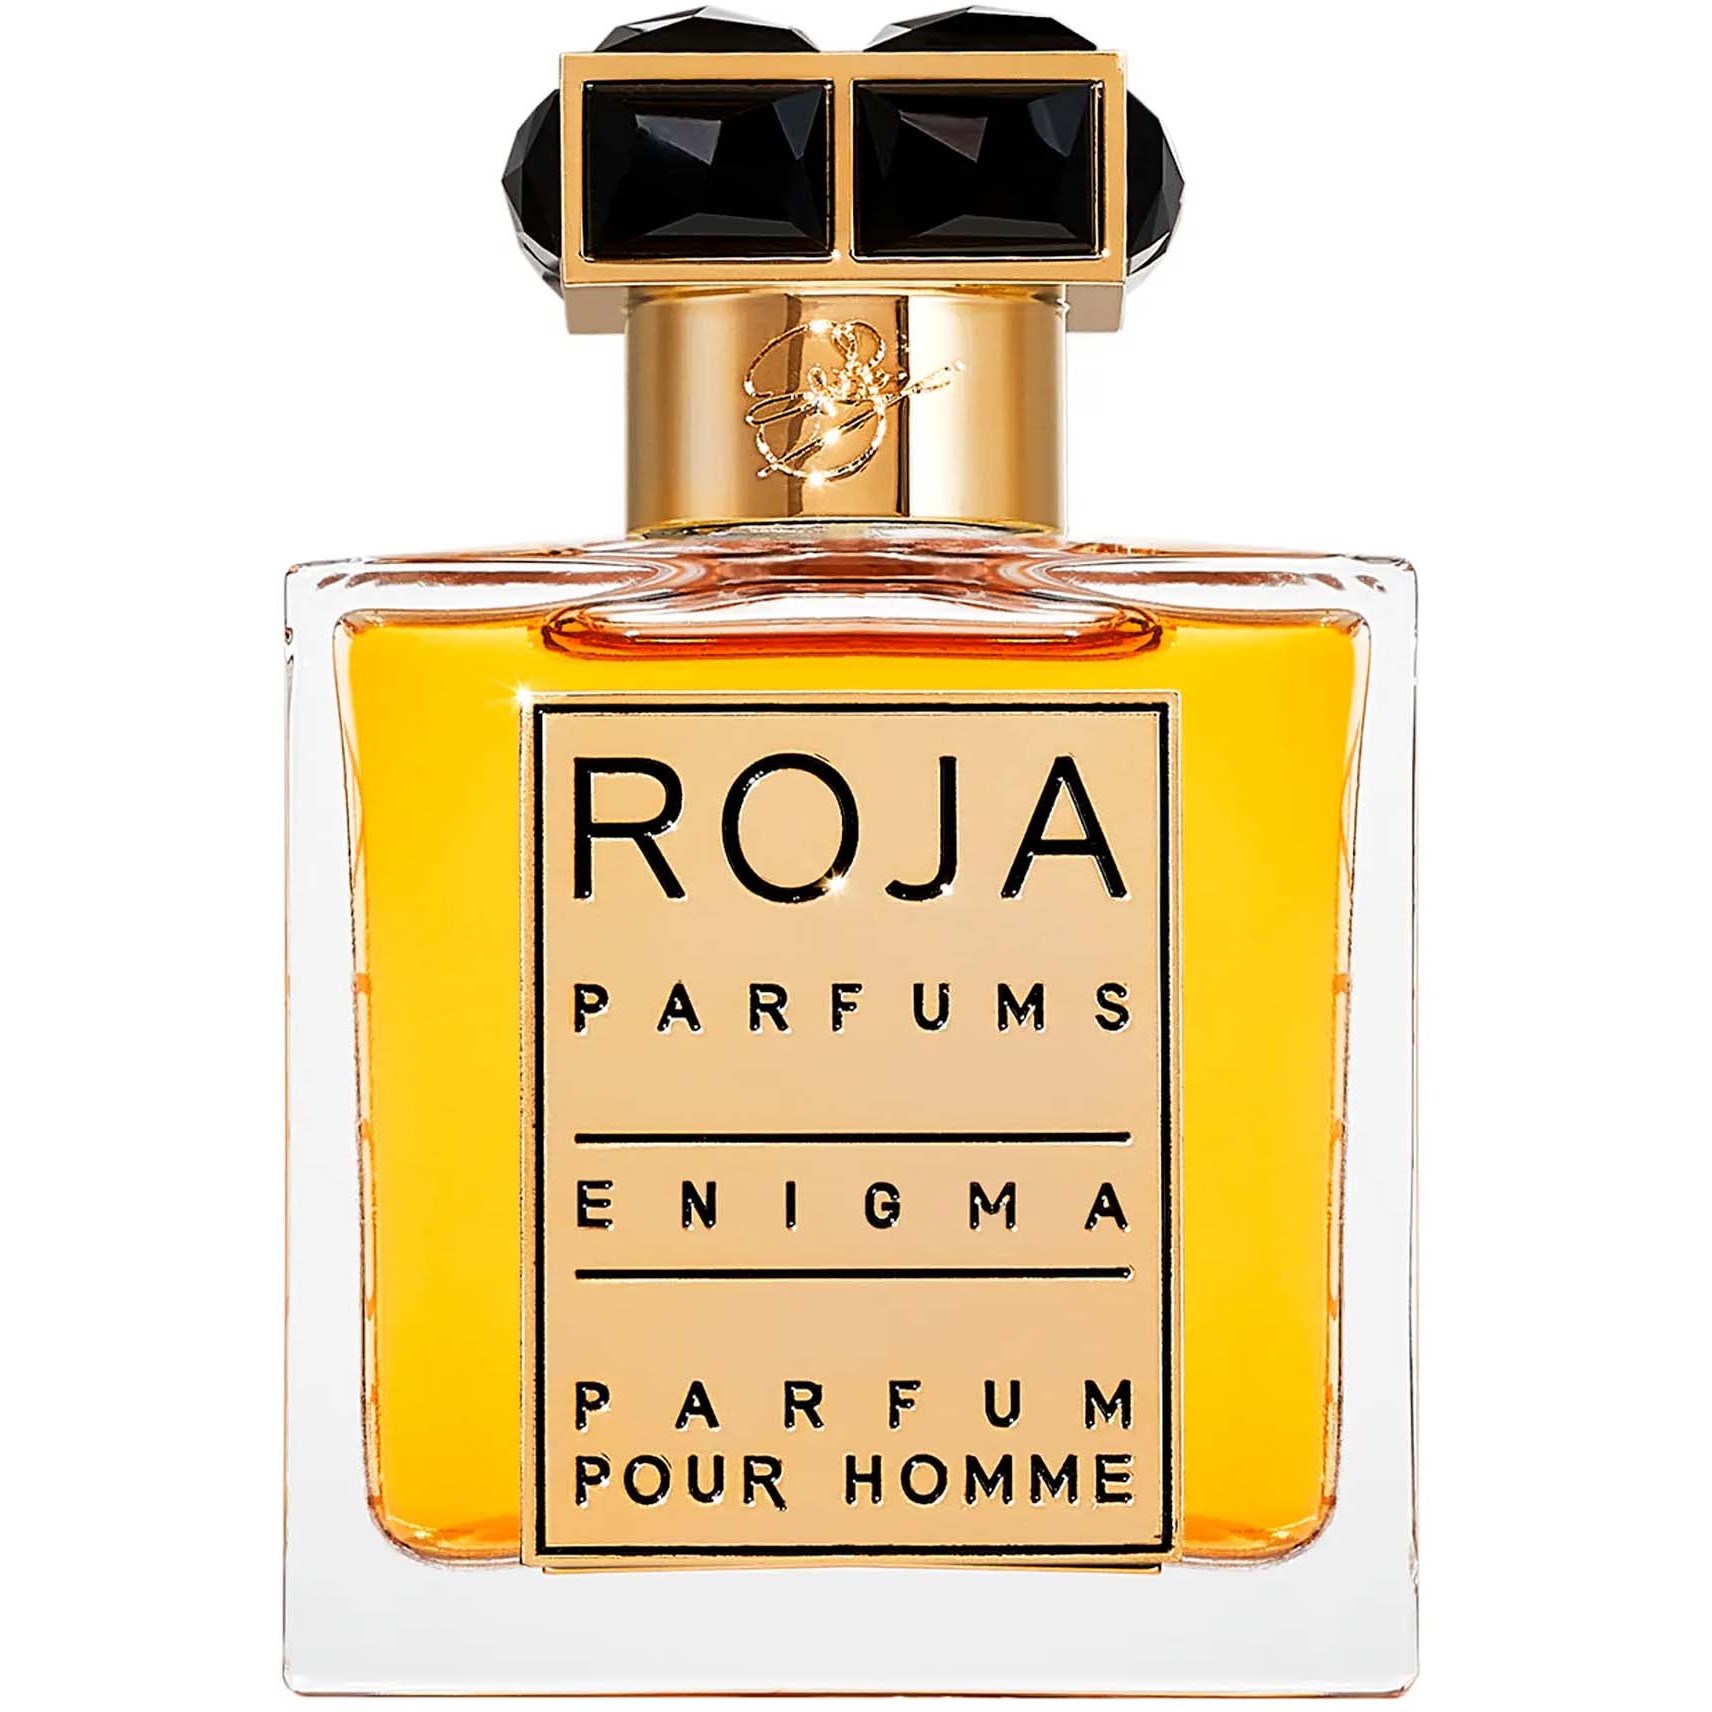 Фото - Чоловічі парфуми Roja Parfums Enigma Pour Homme Parfum 50 ml 